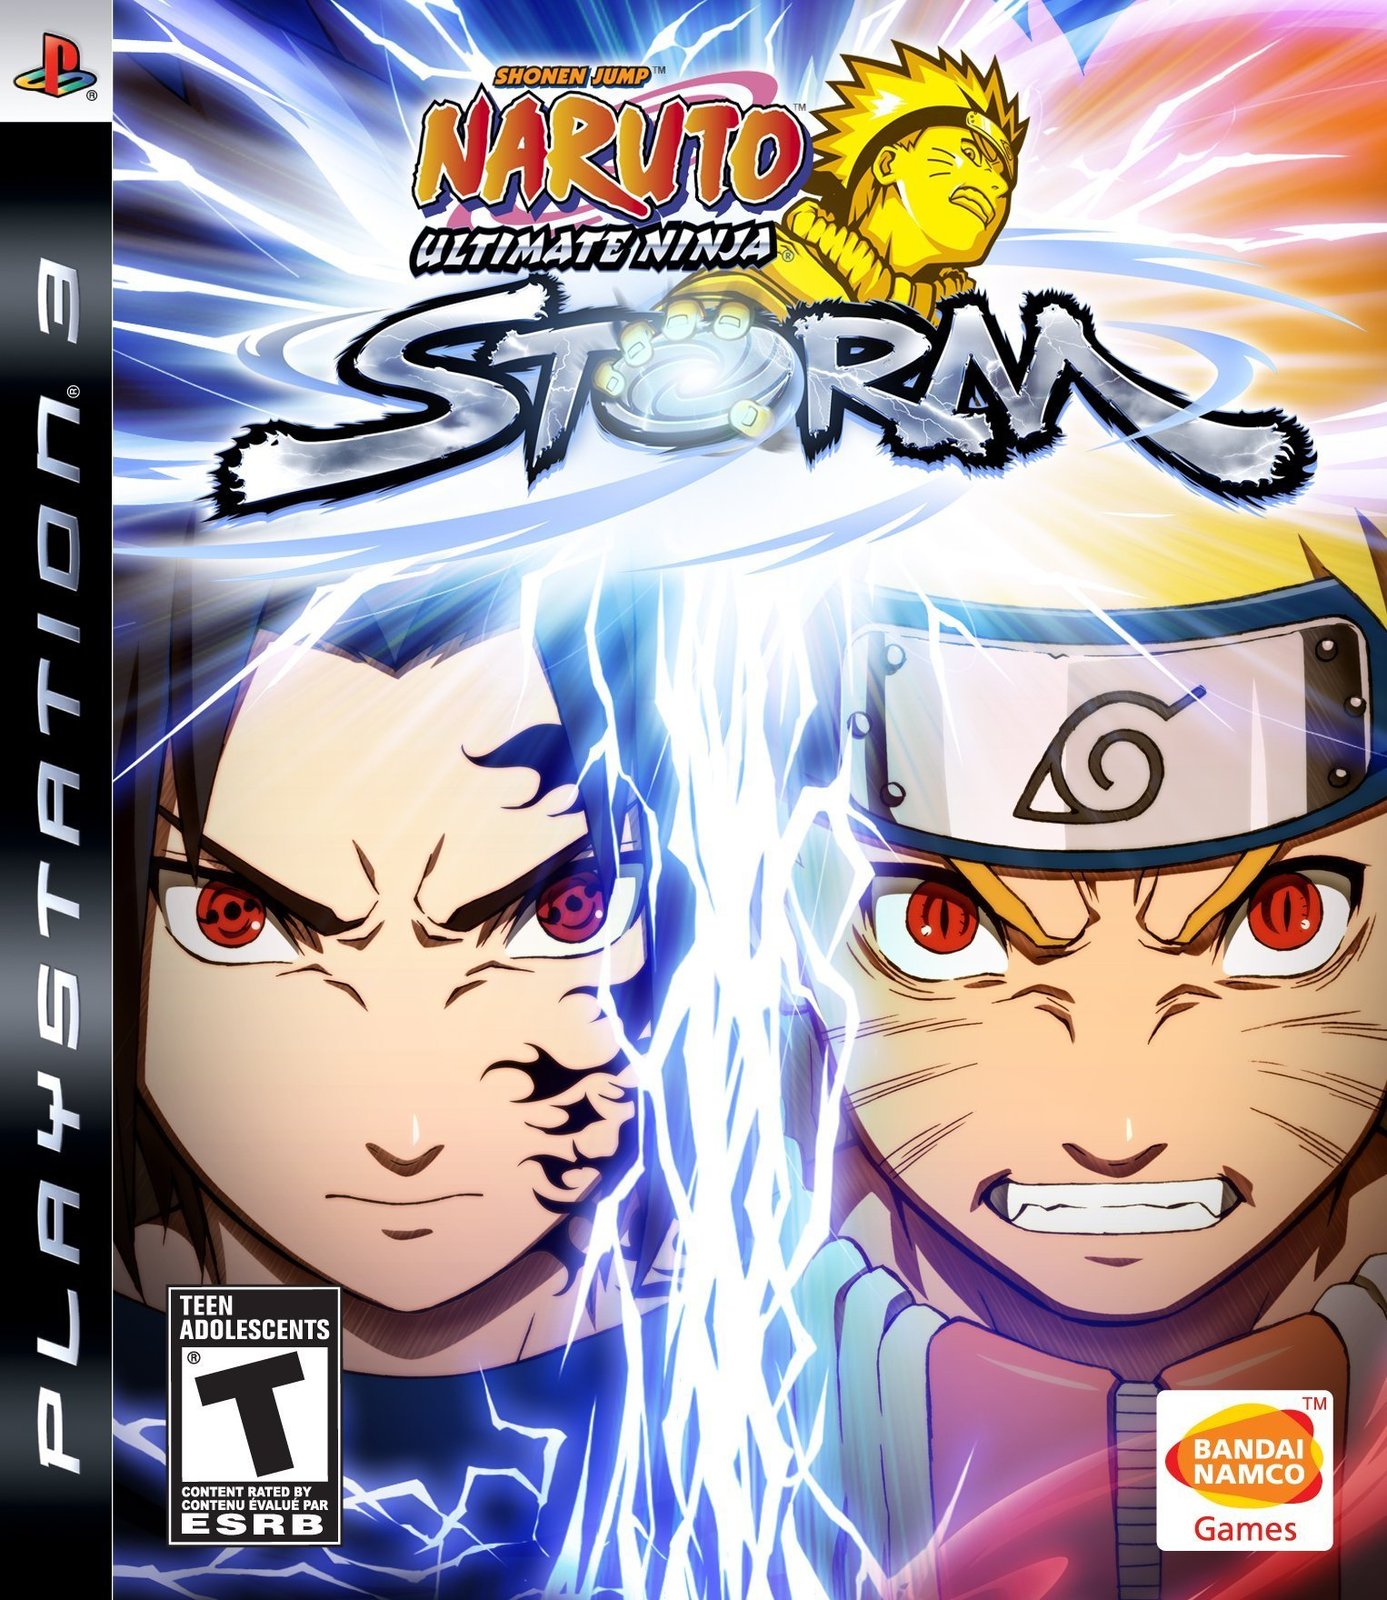 Laden Sie den Patch offiziell Bandai Namco Naruto Sturm 4